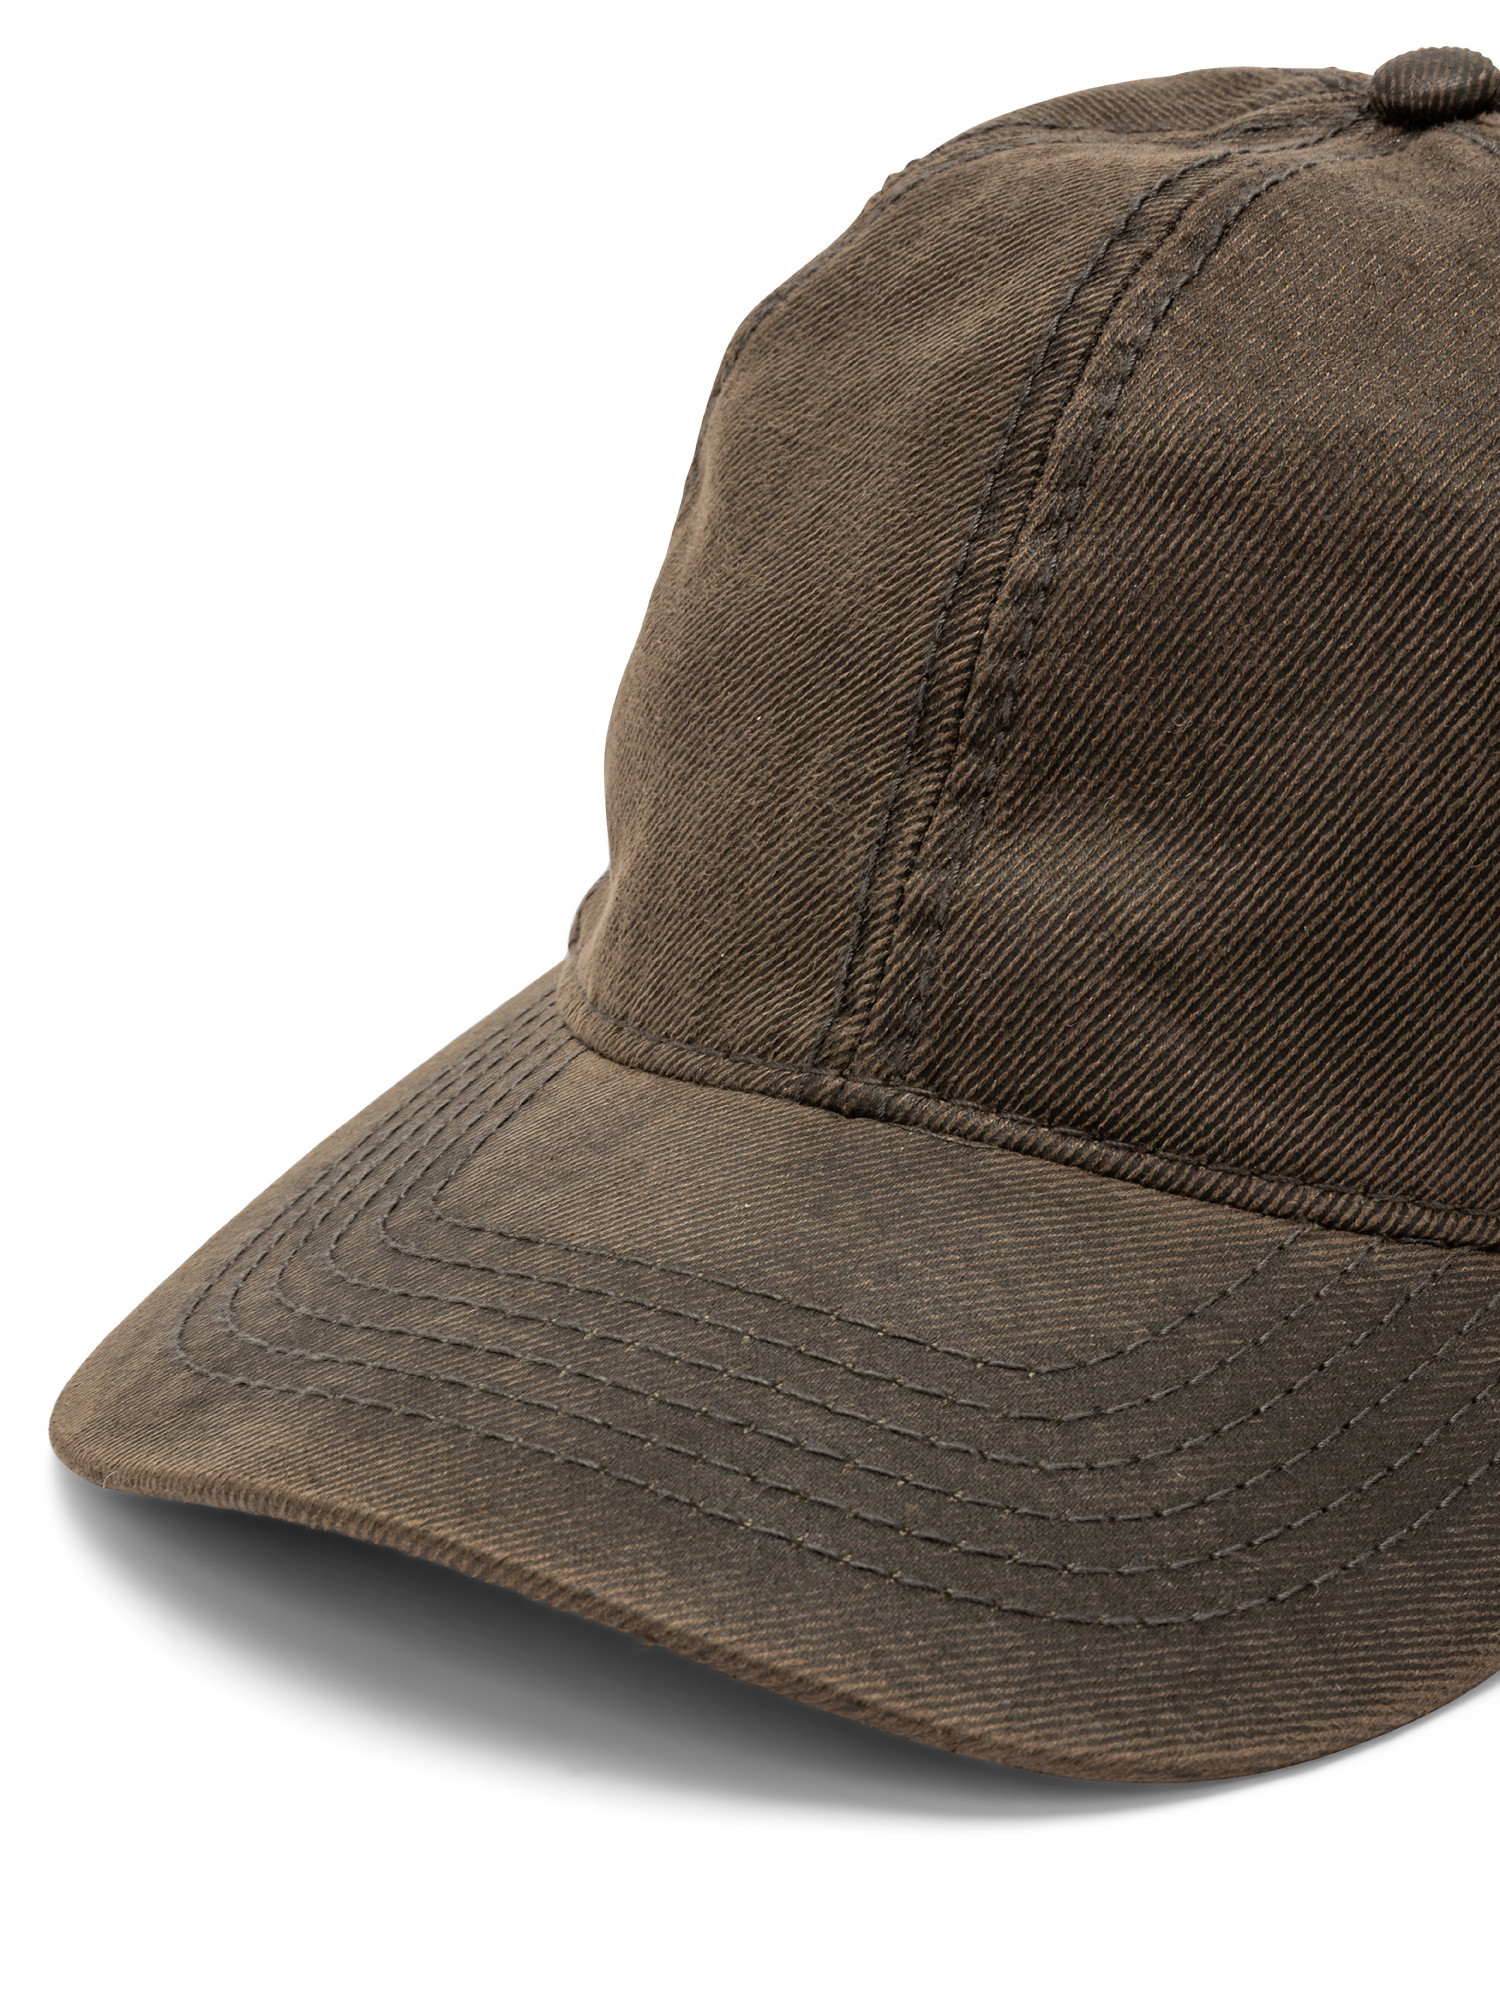 Baseball hat, Brown, large image number 1